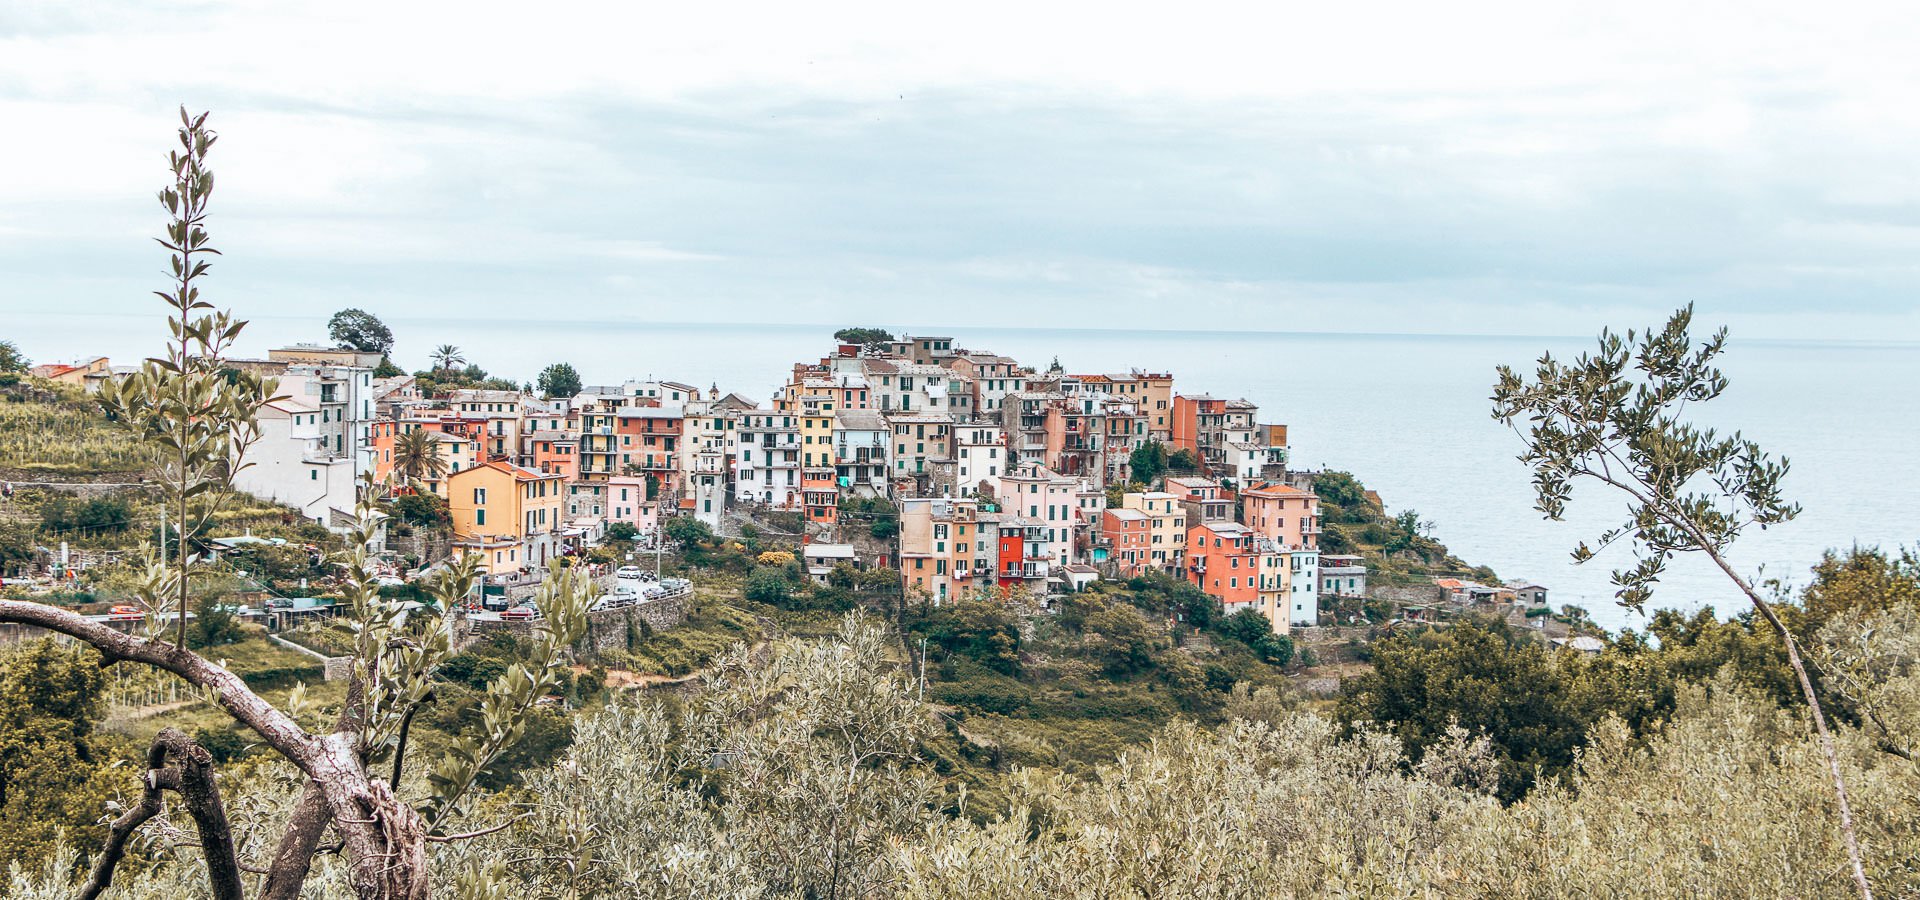 How To Spend 3 Days In Cinque Terre | hidden gems in Europe 2